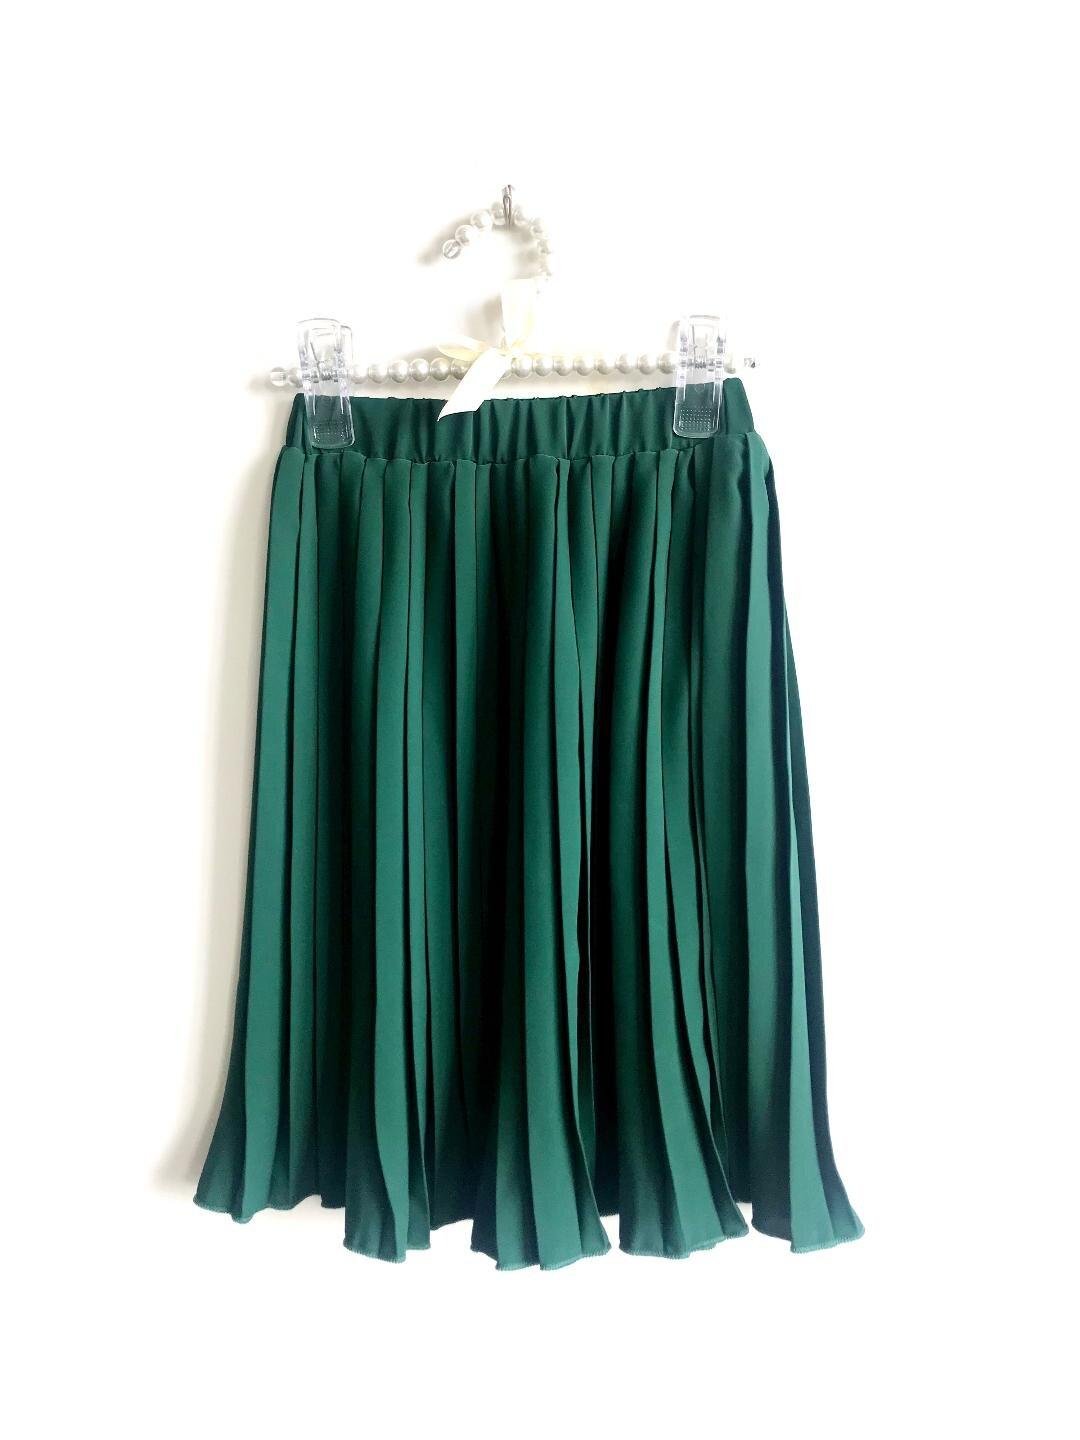 Hunter Green Pleated Matching Skirts - LITTLE MIA BELLA